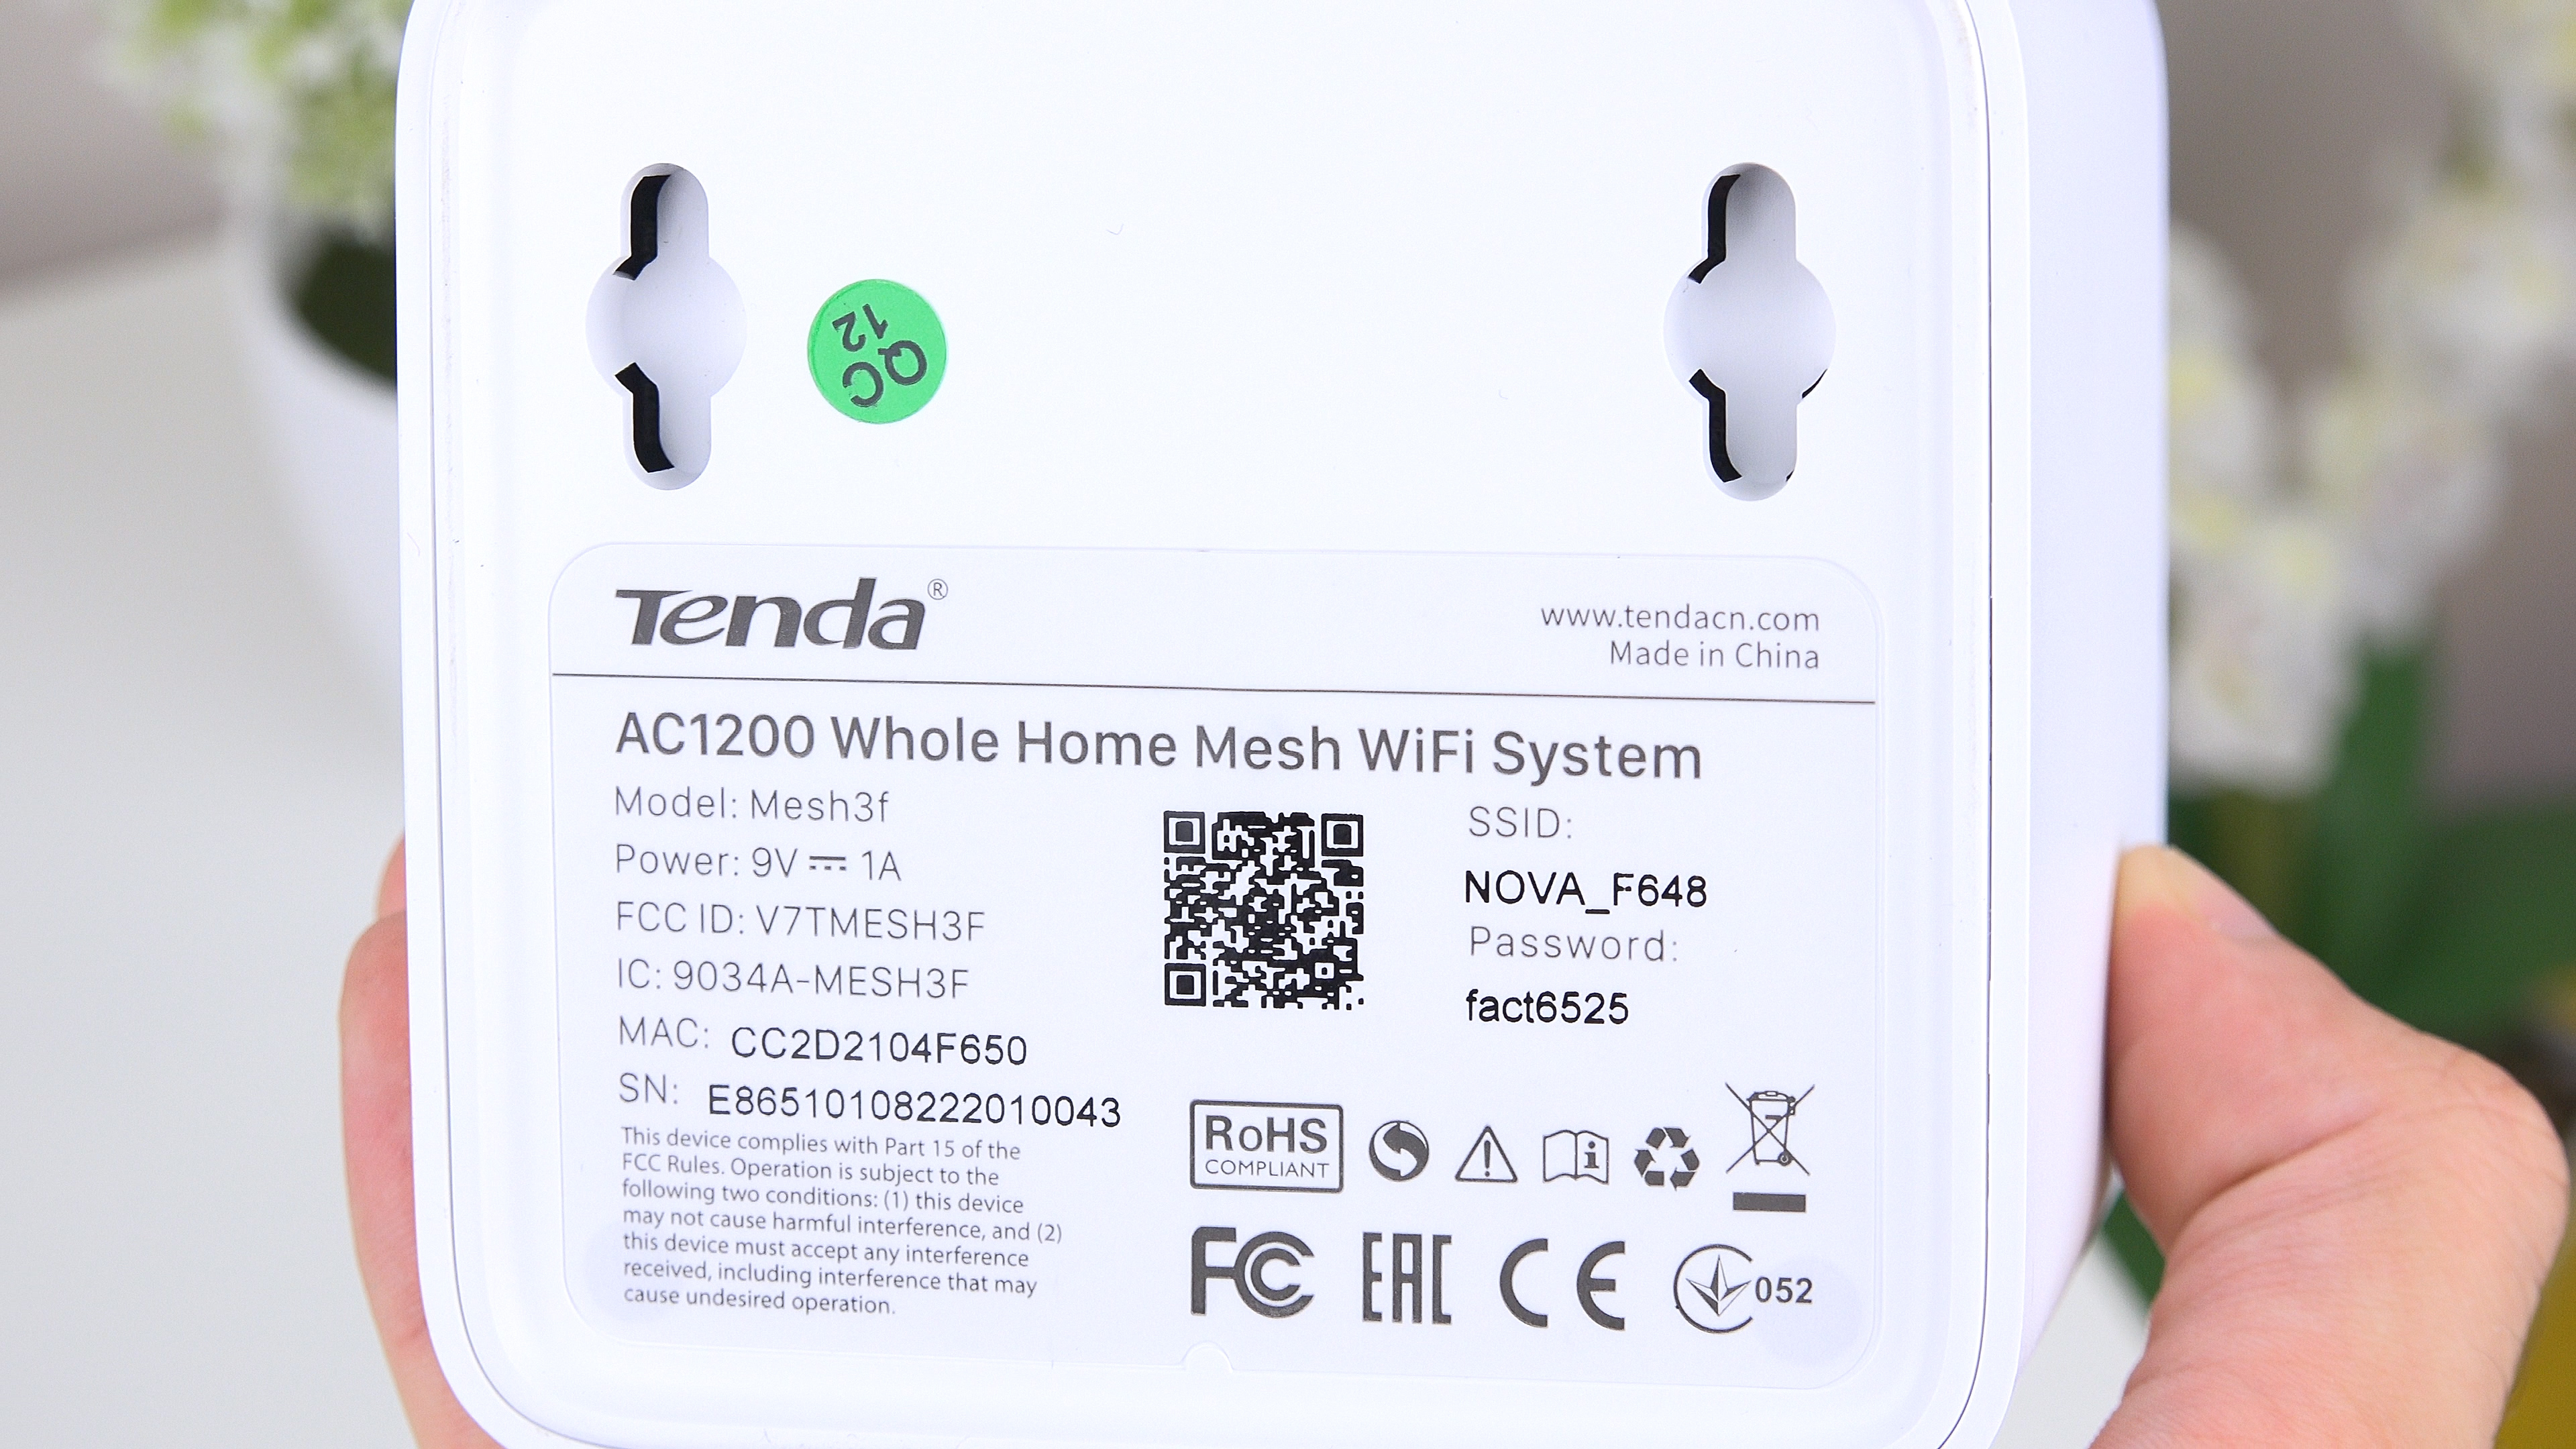 300 metrekare destekli Mesh Wi-Fi 'Tenda Nova MW3 incelemesi'